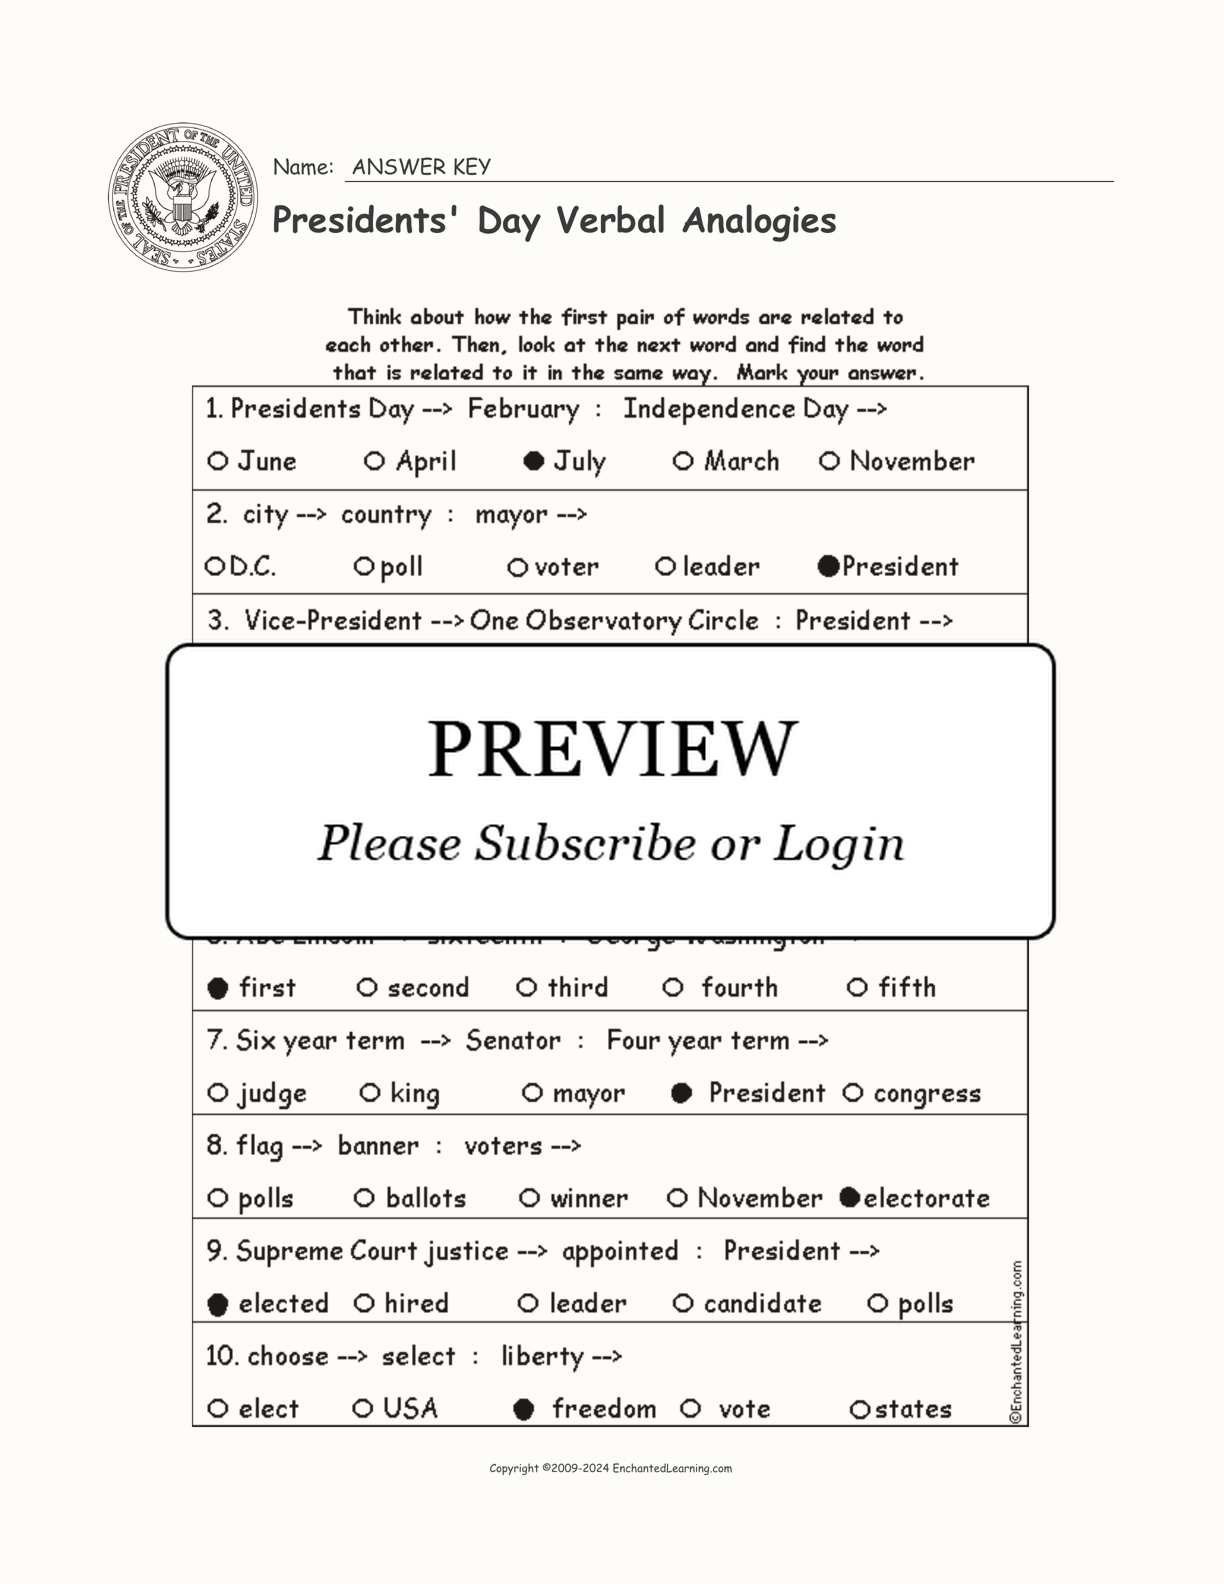 Presidents' Day Verbal Analogies interactive worksheet page 2